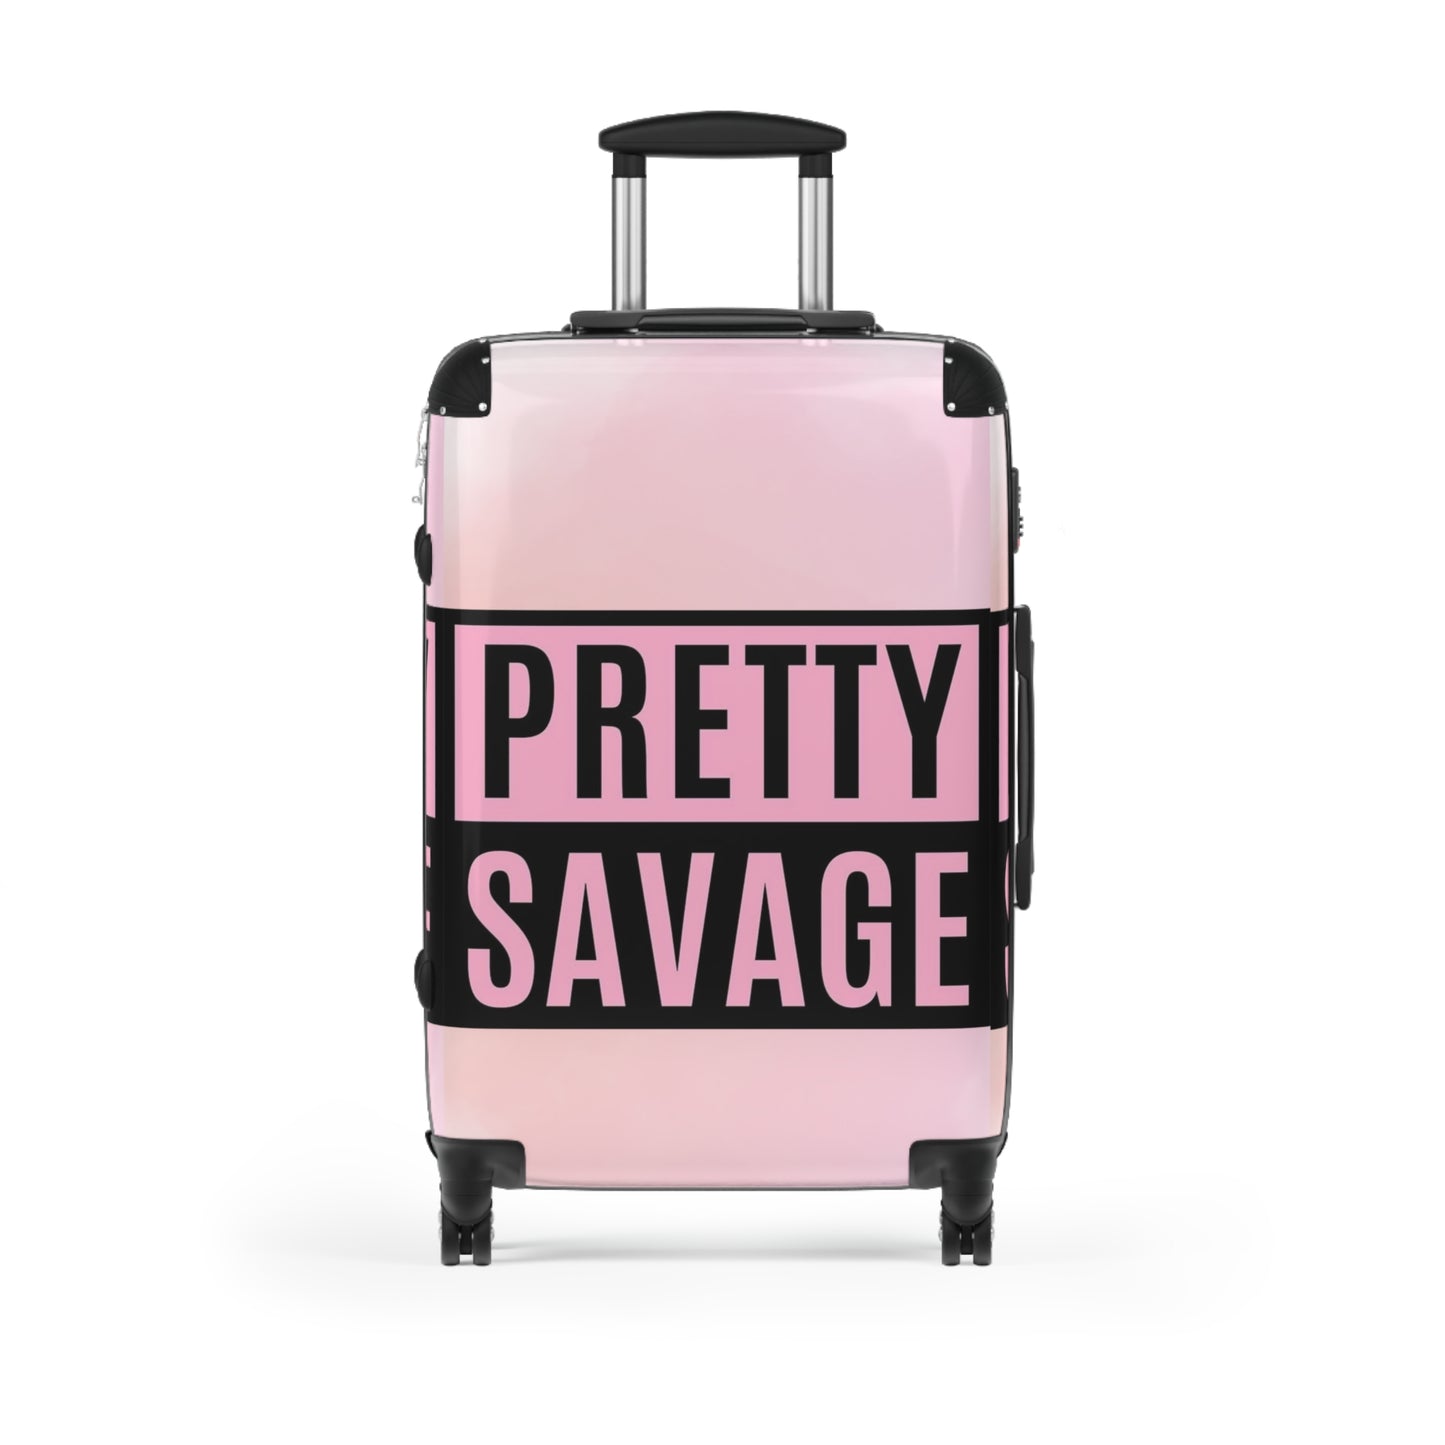 PRETTY SAVAGE Suitcase